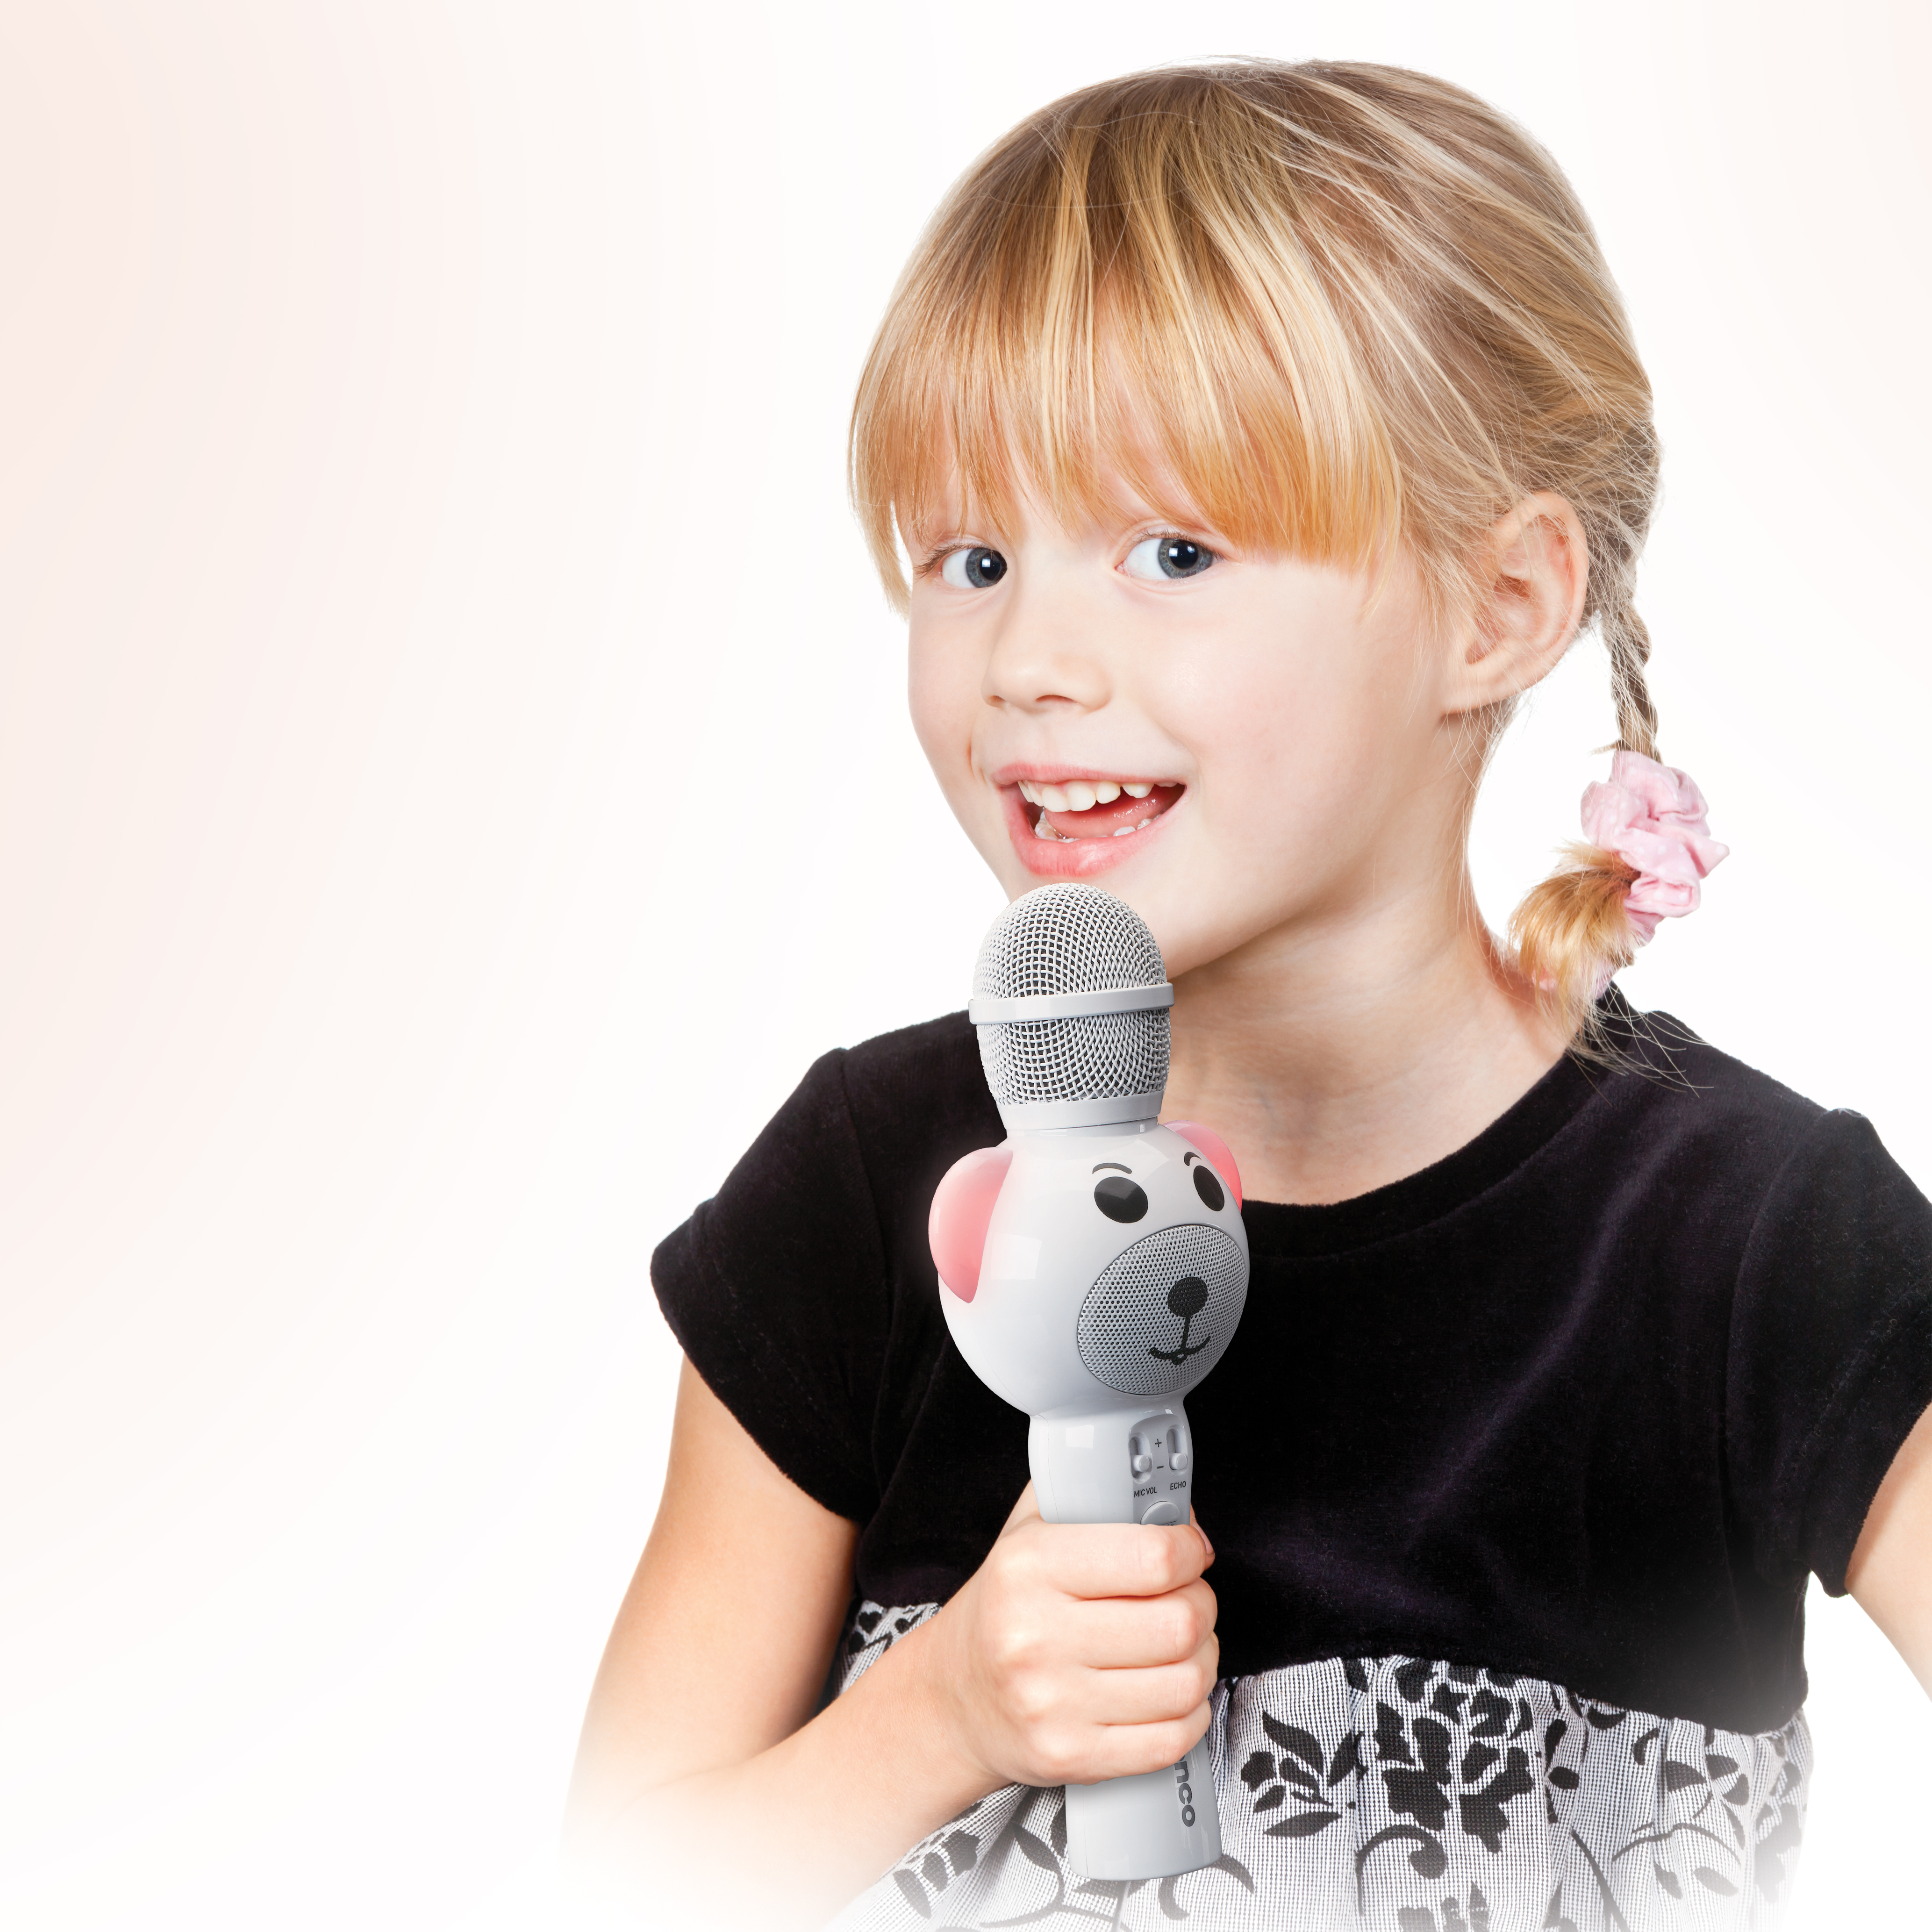 LENCO BMC-060WH Kinder-Karaoke-Mikrofon, Weiß-Schwarz